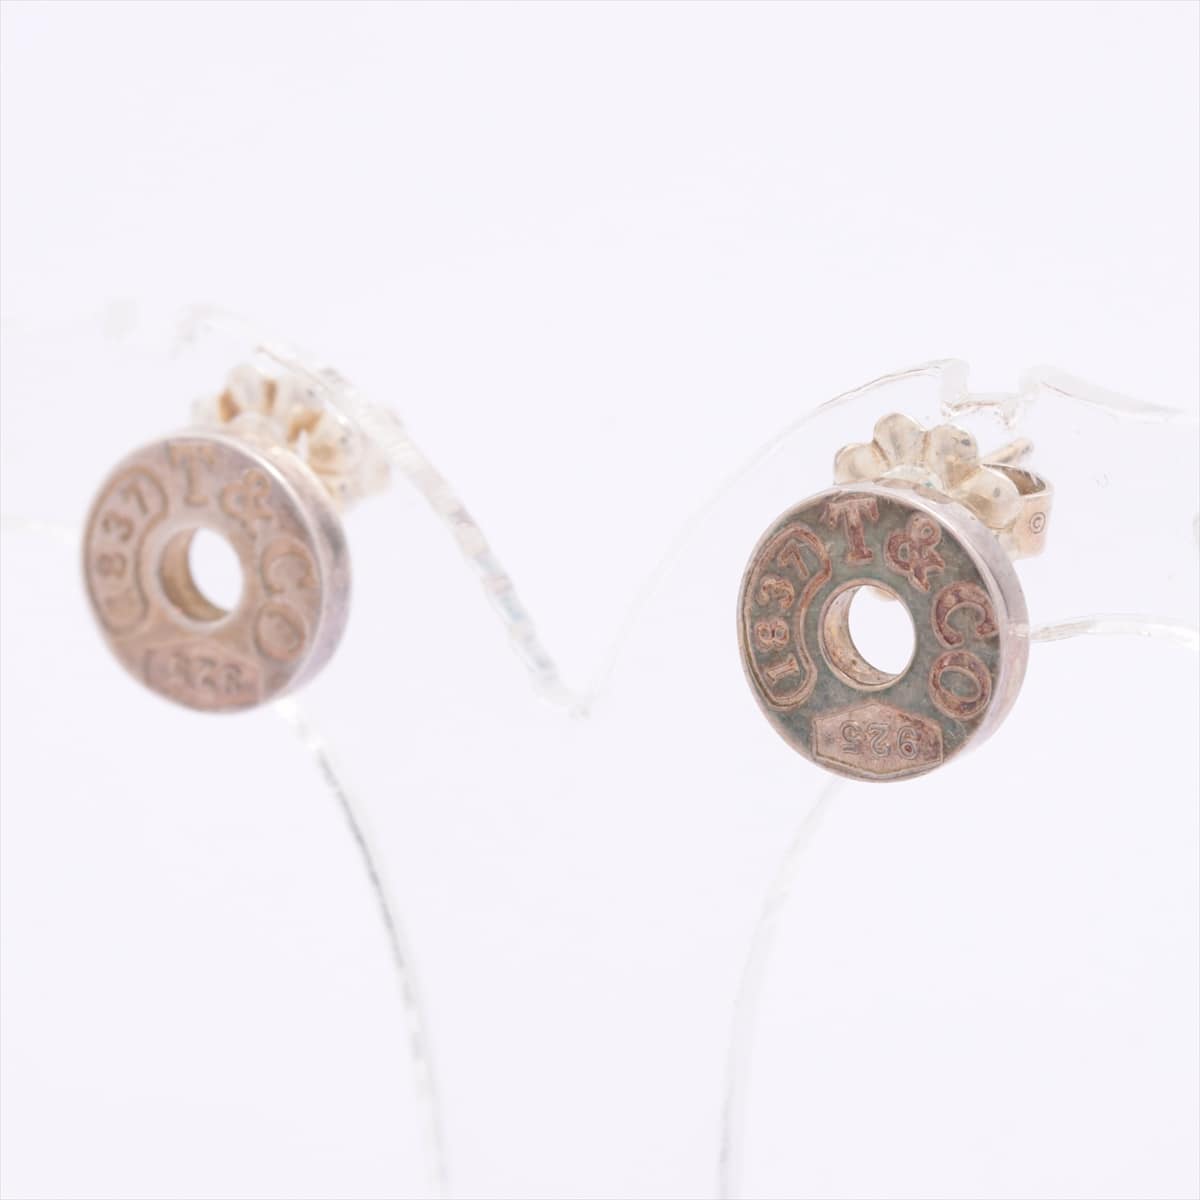 Tiffany 1837 Circle Piercing jewelry 925 2.7g Silver